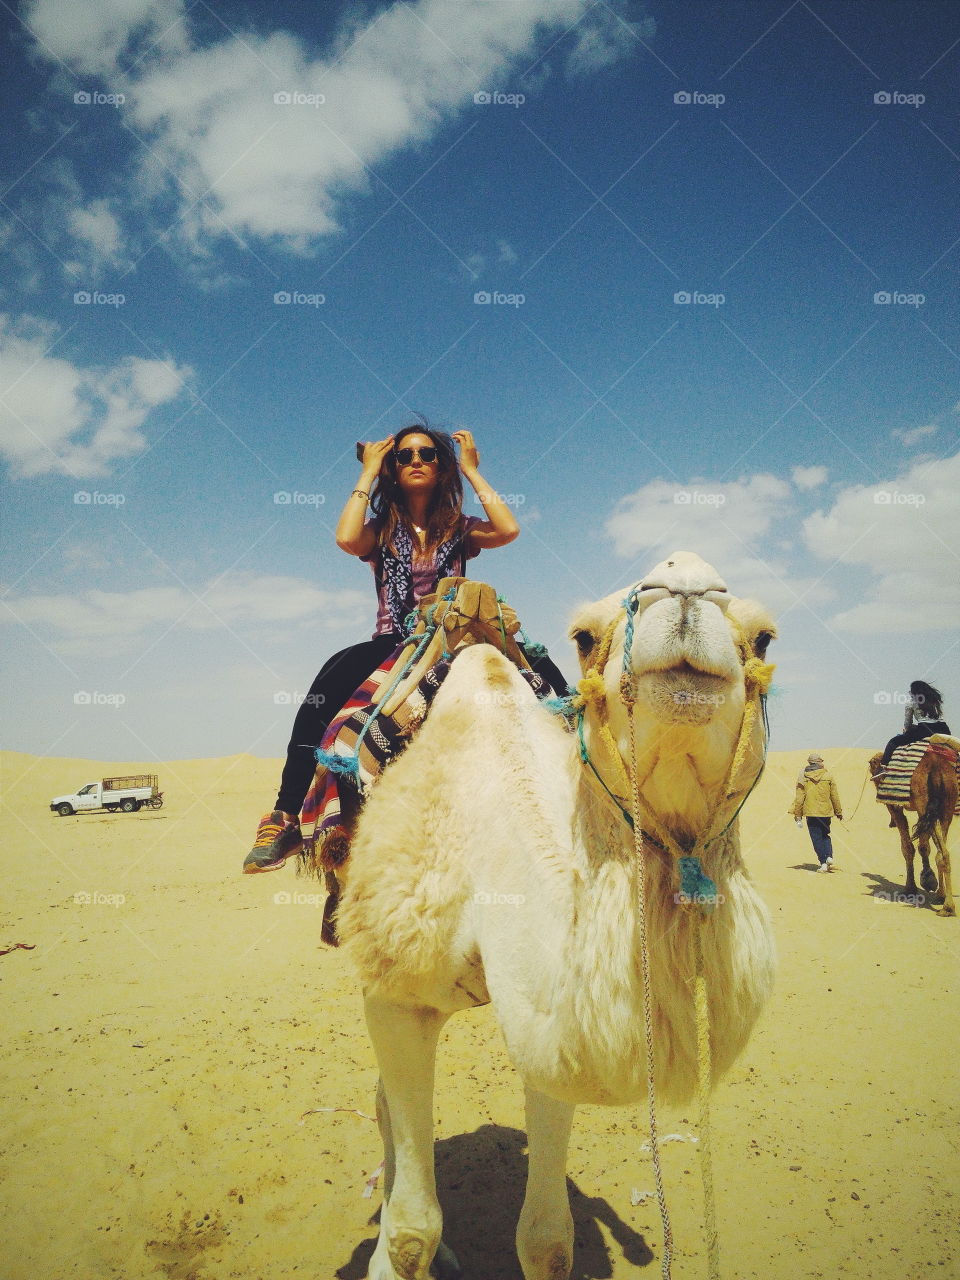 Woman on camel ride in desert